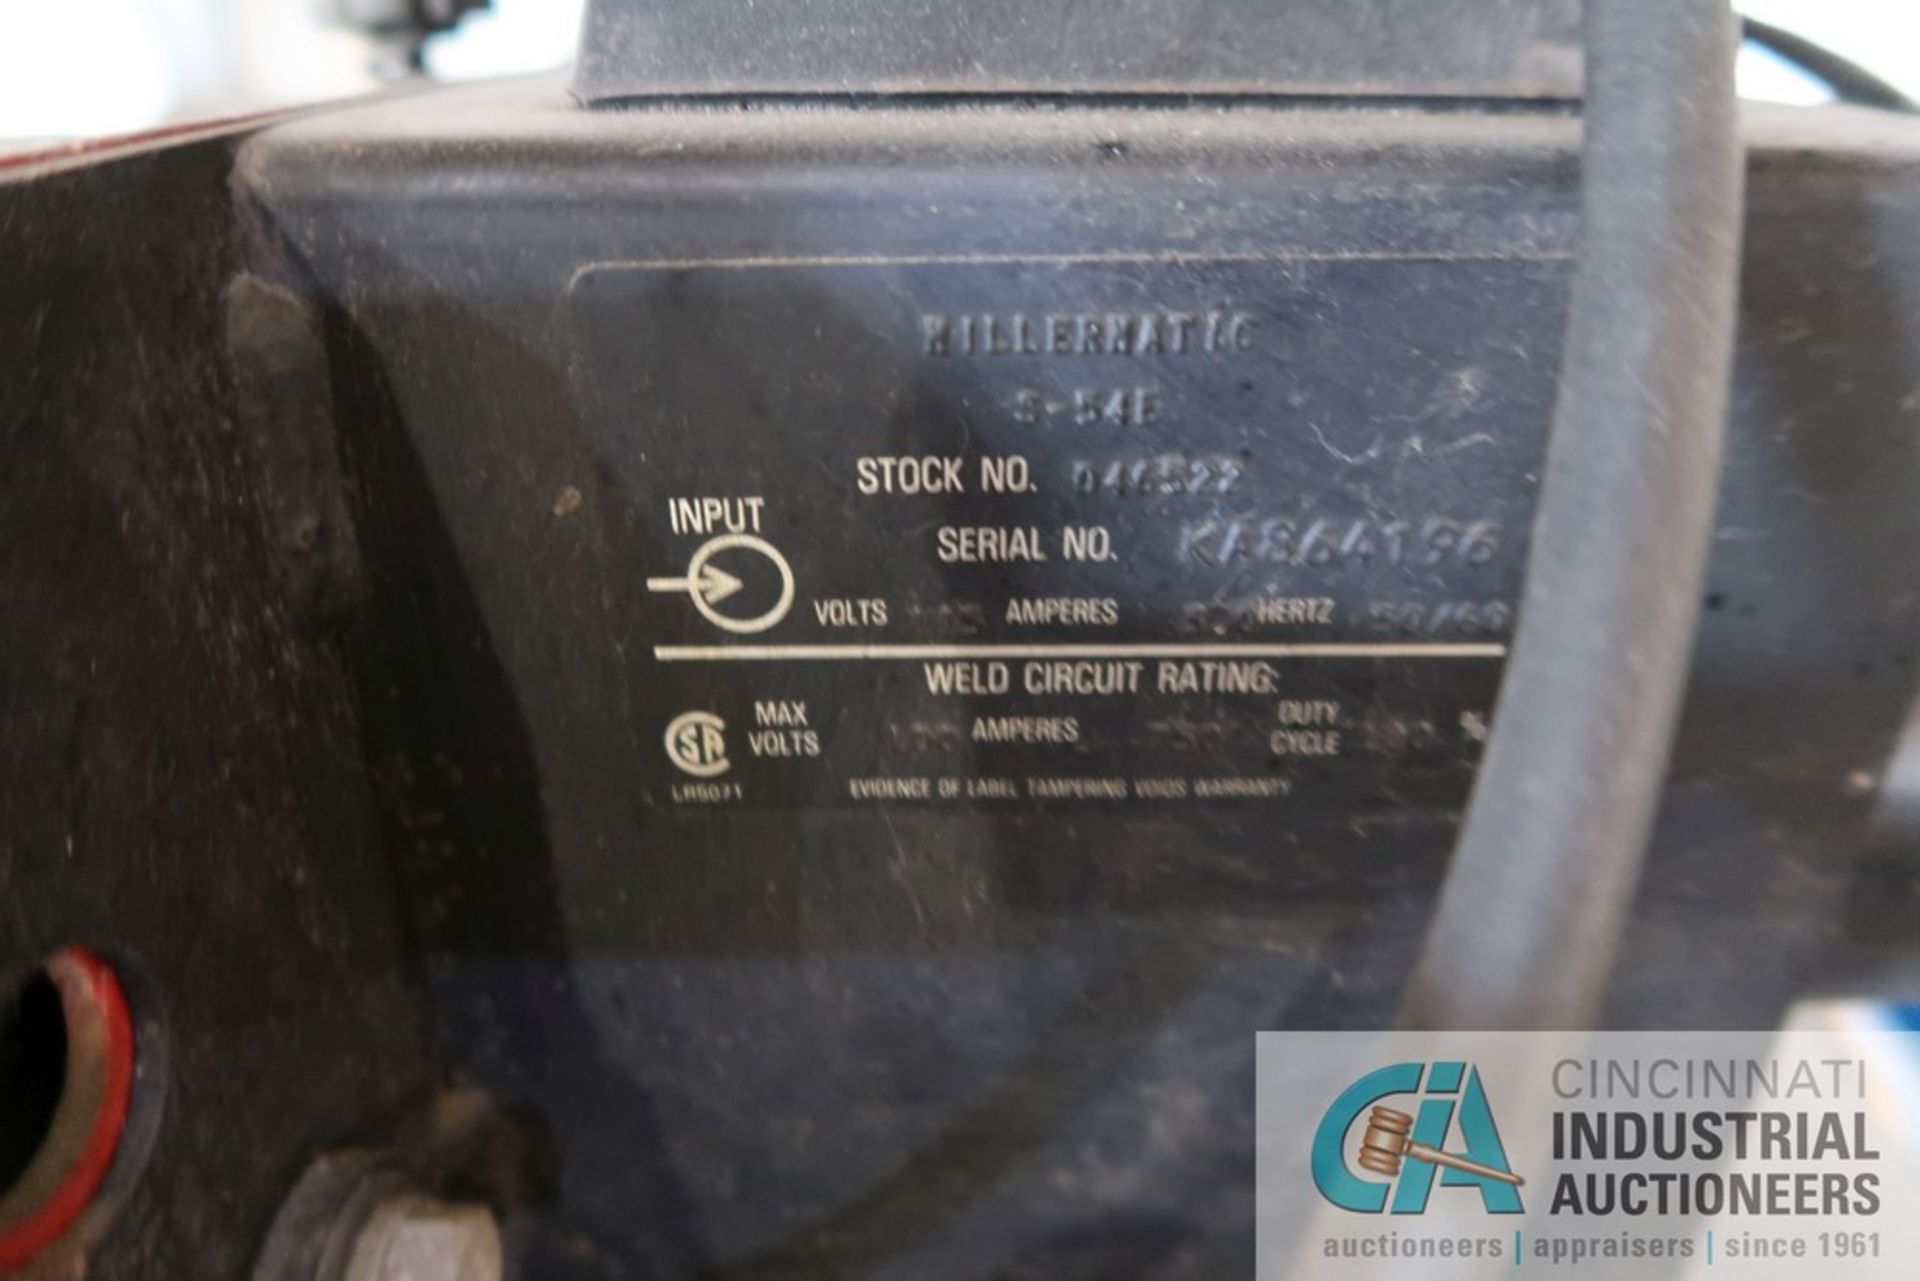 450 AMP MILLER MODEL DELTAWELD 451 CONSTANT VOLTAGE DC ARC WELDING POWER SOURCE S/N KA825869 WITH - Image 6 of 6